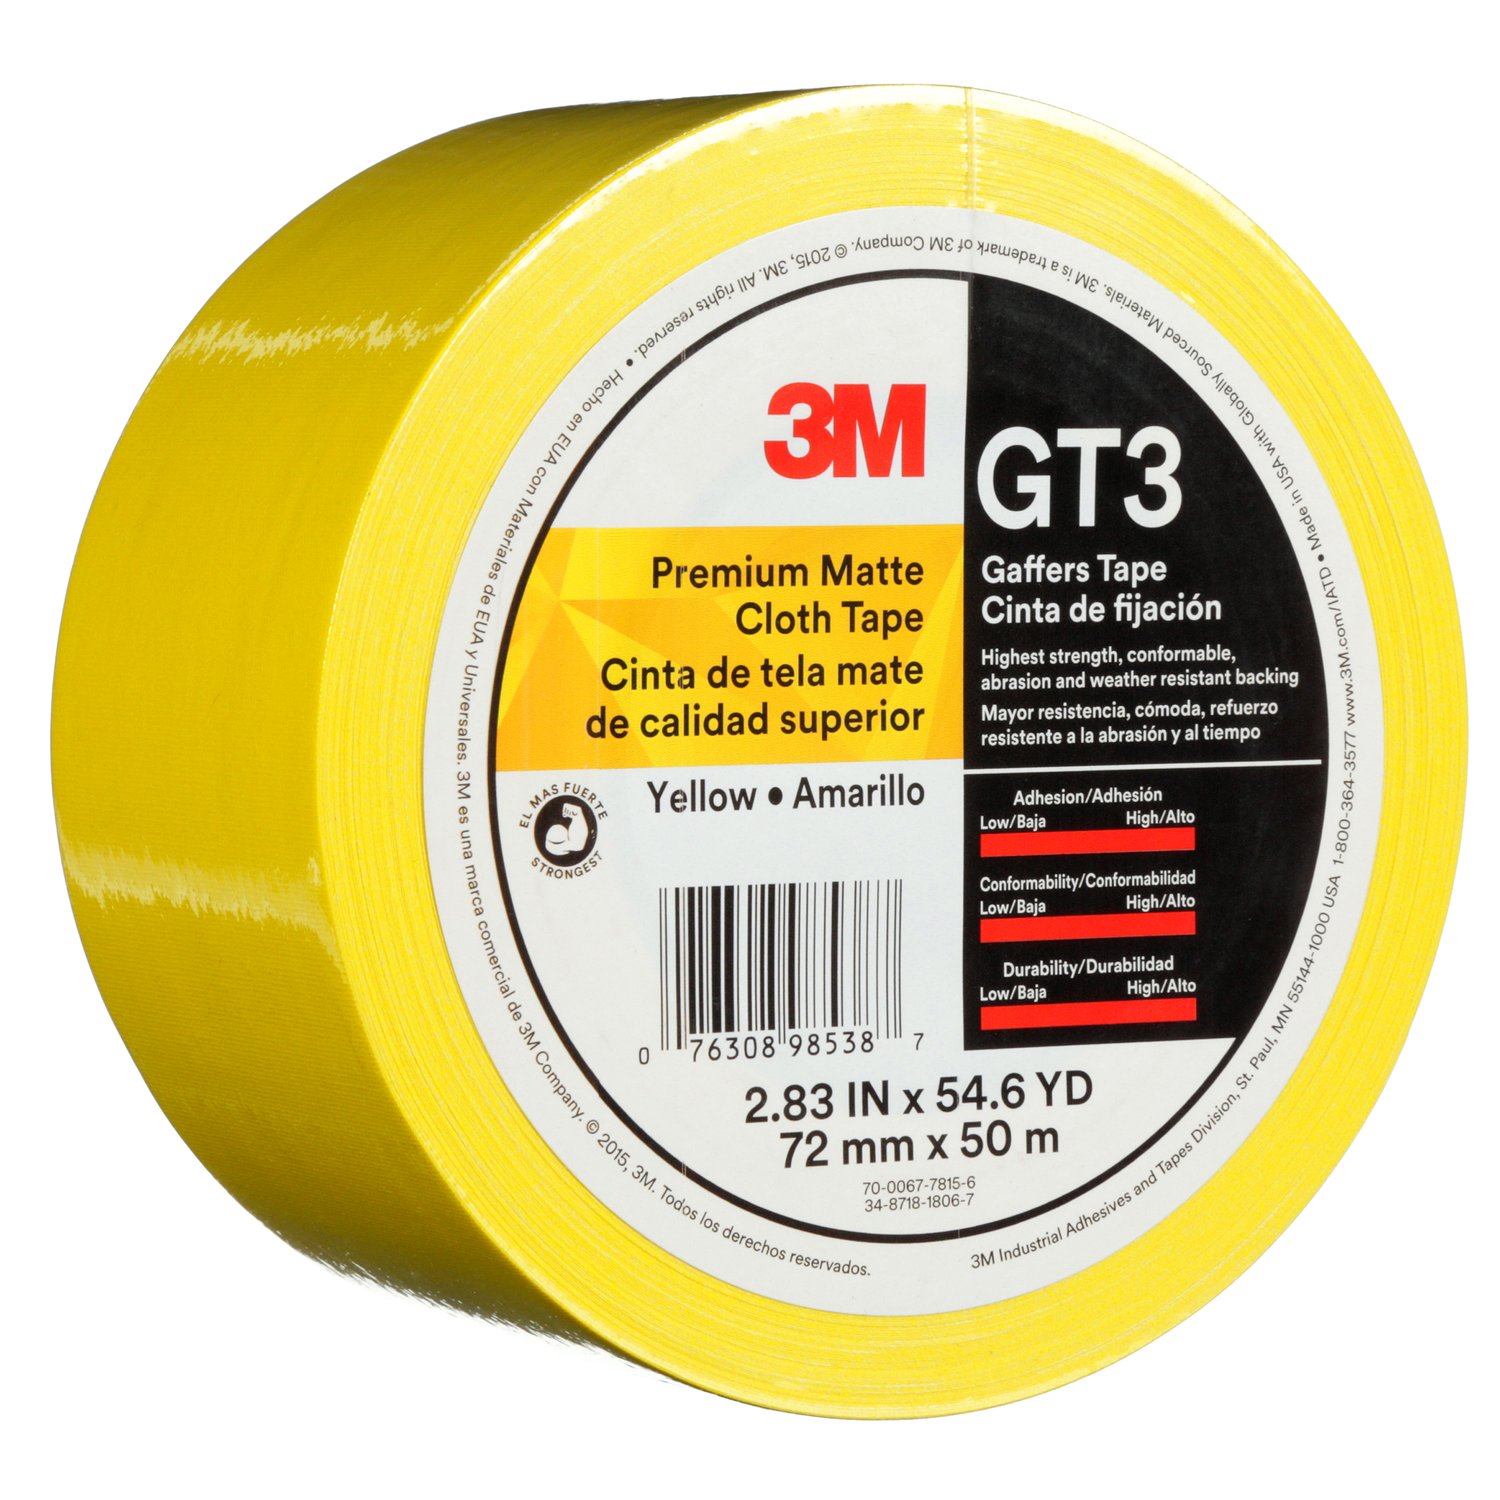 7010312519 - 3M Premium Matte Cloth (Gaffers) Tape GT3, Yellow, 72 mm x 50 m, 11
mil, 16/Case